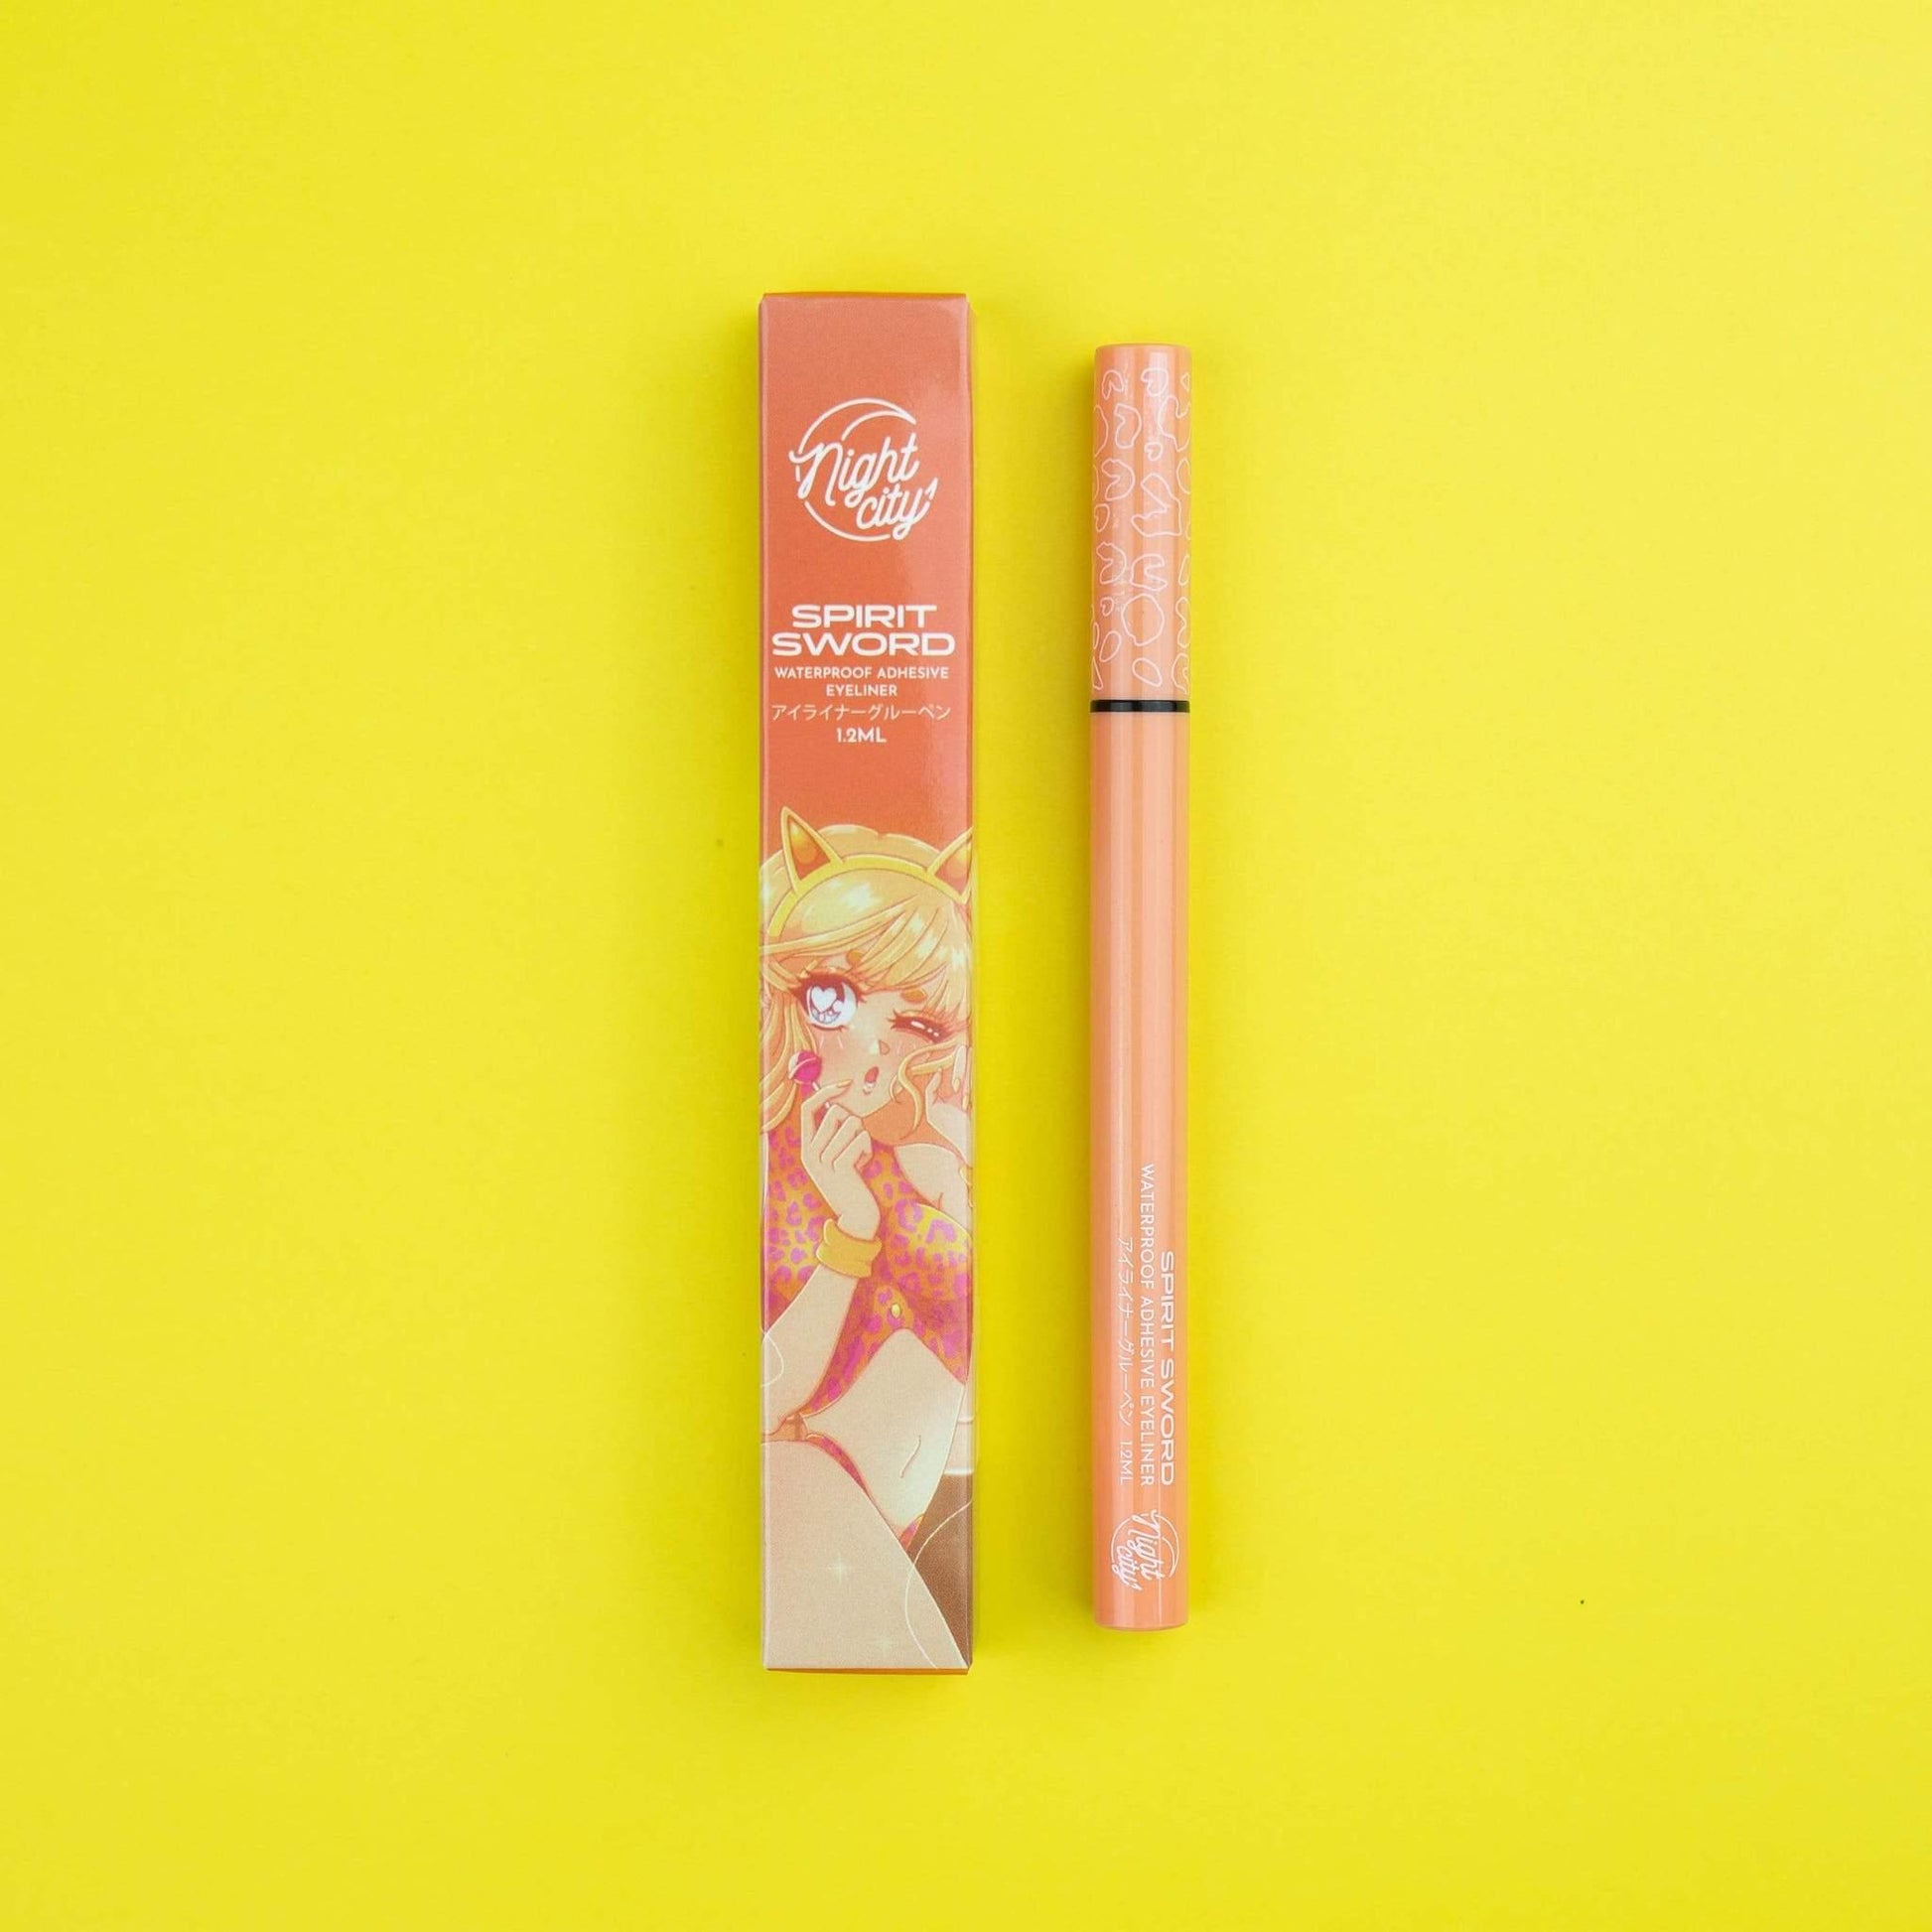 90s anime aesthetic anime makeup yu yu Hakusho orange spirit sword adhesive glue pen lashes (7075375481032)